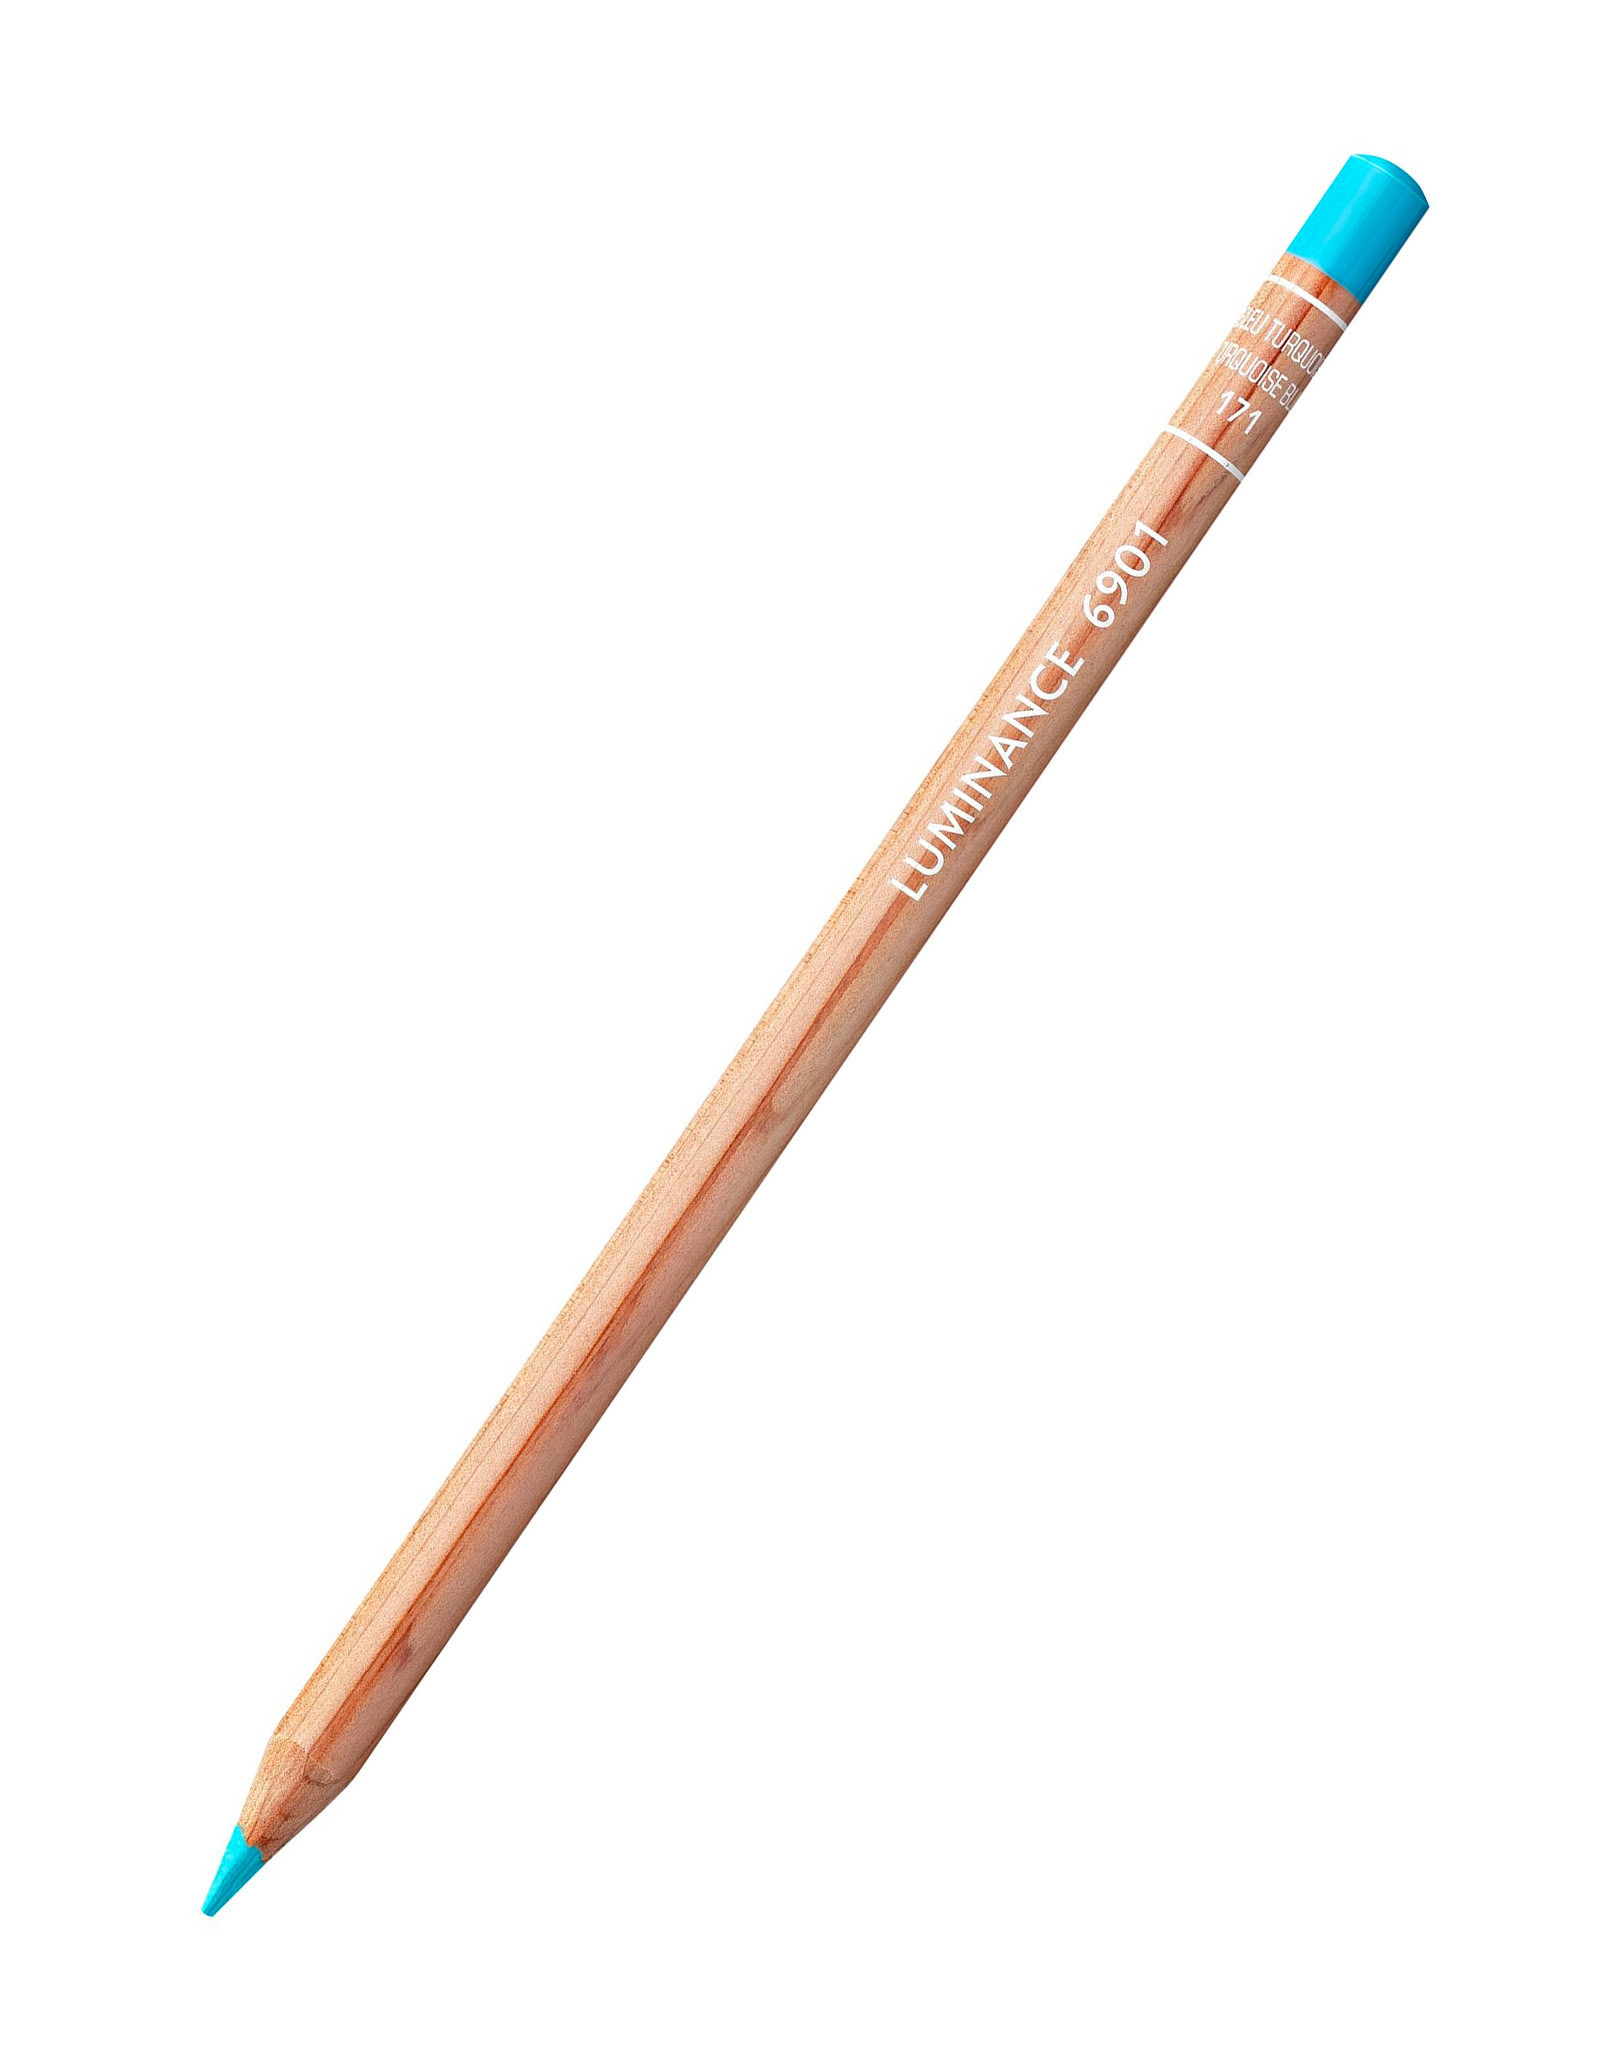 Caran d'Ache Luminance Pencil Turquoise Blue